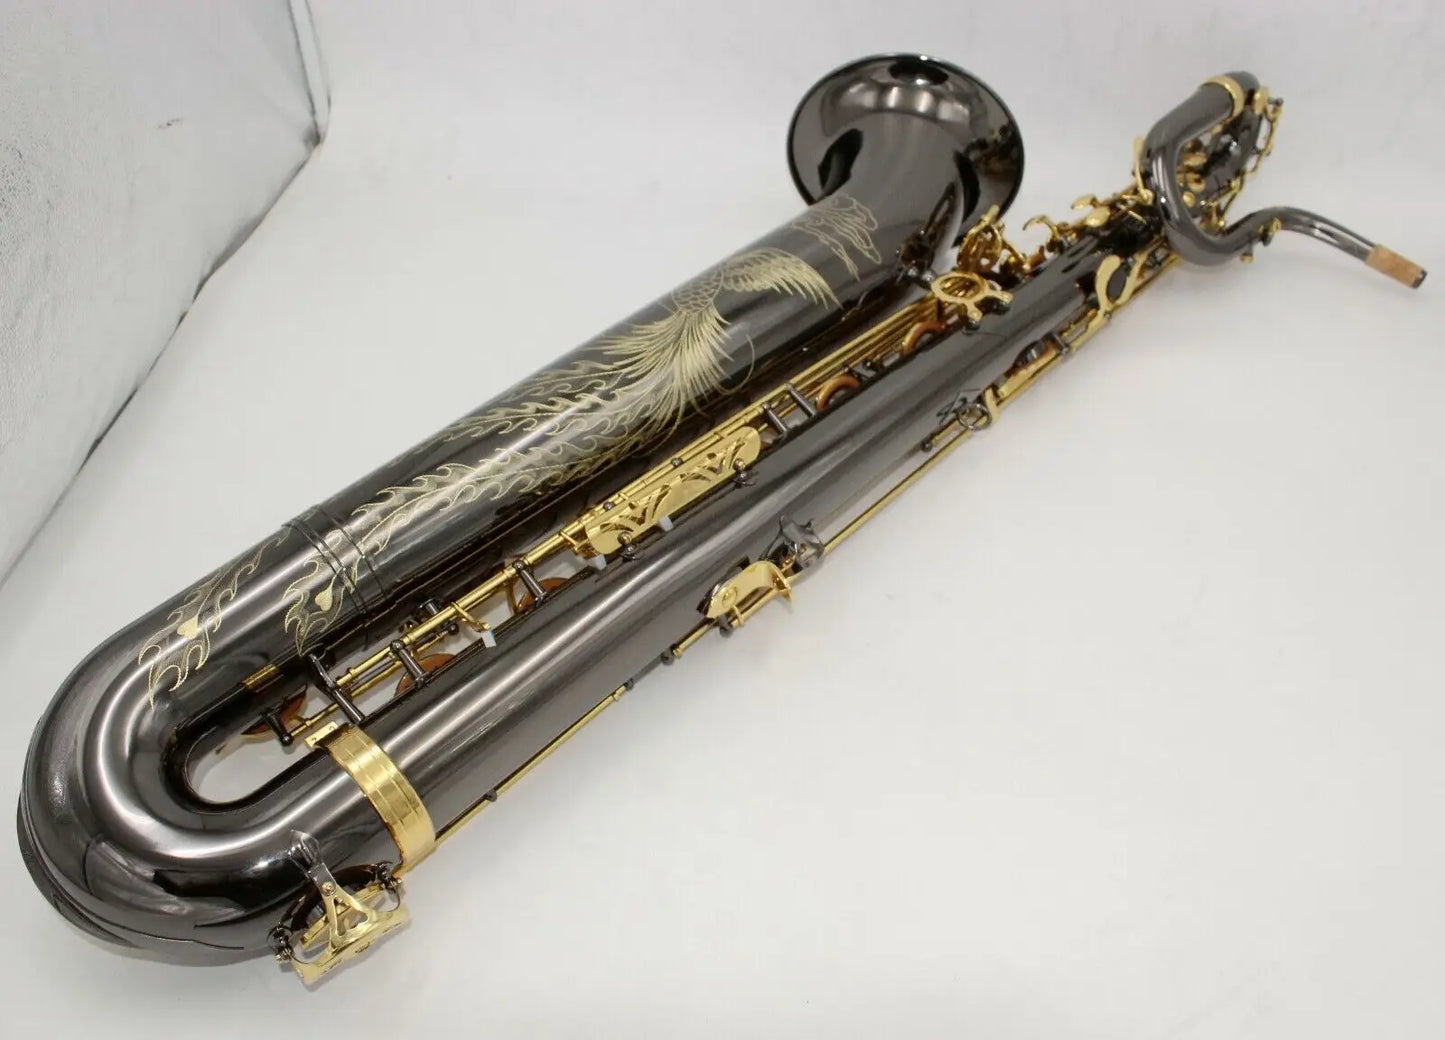 EM music black nickel body gold key Baritone Saxophone with phoenix engraving